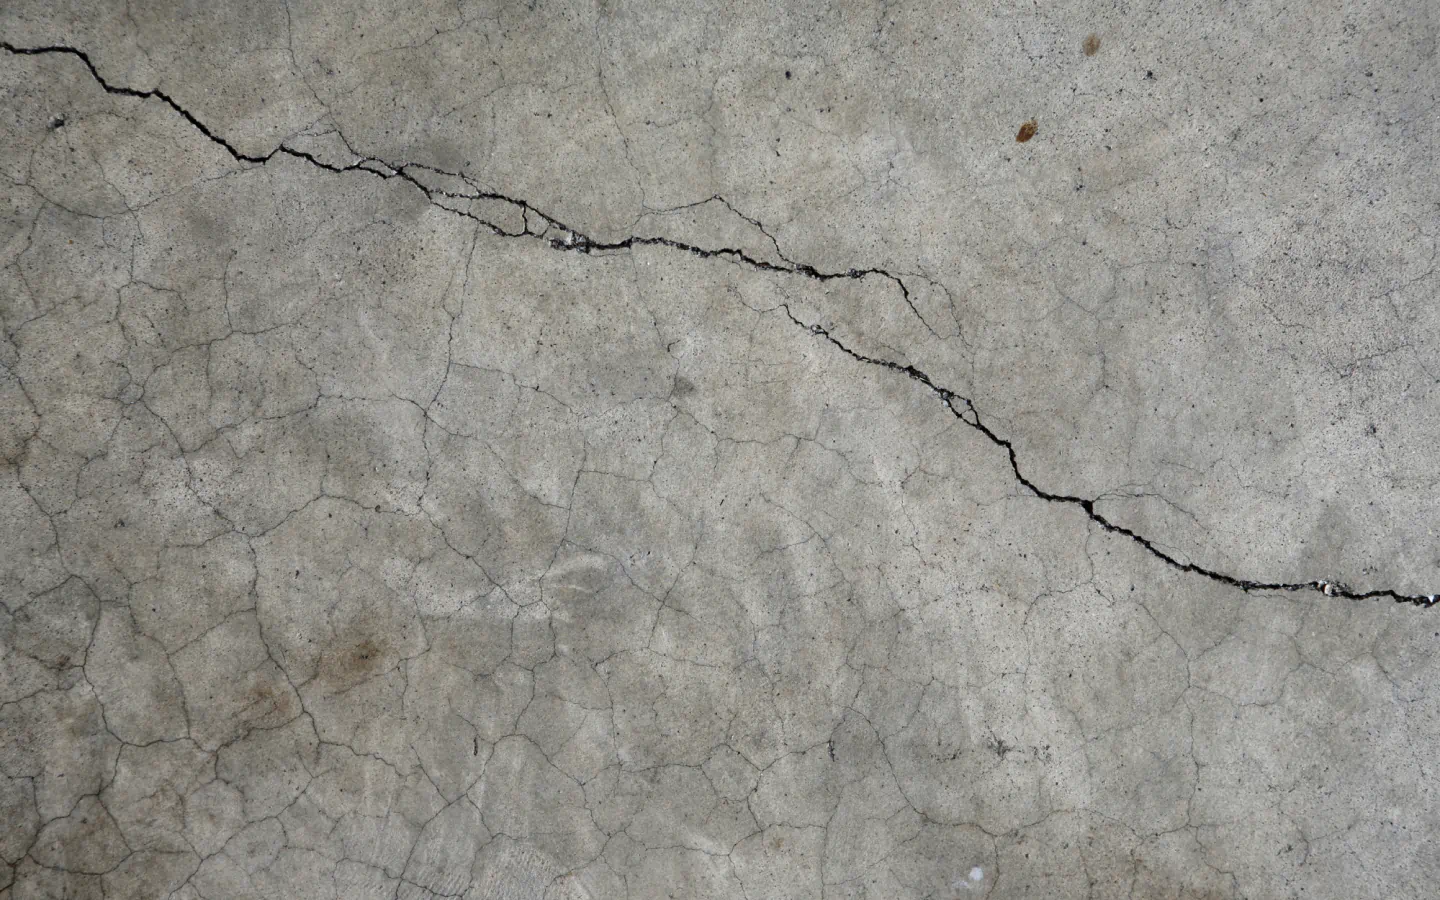 crack on a concrete base